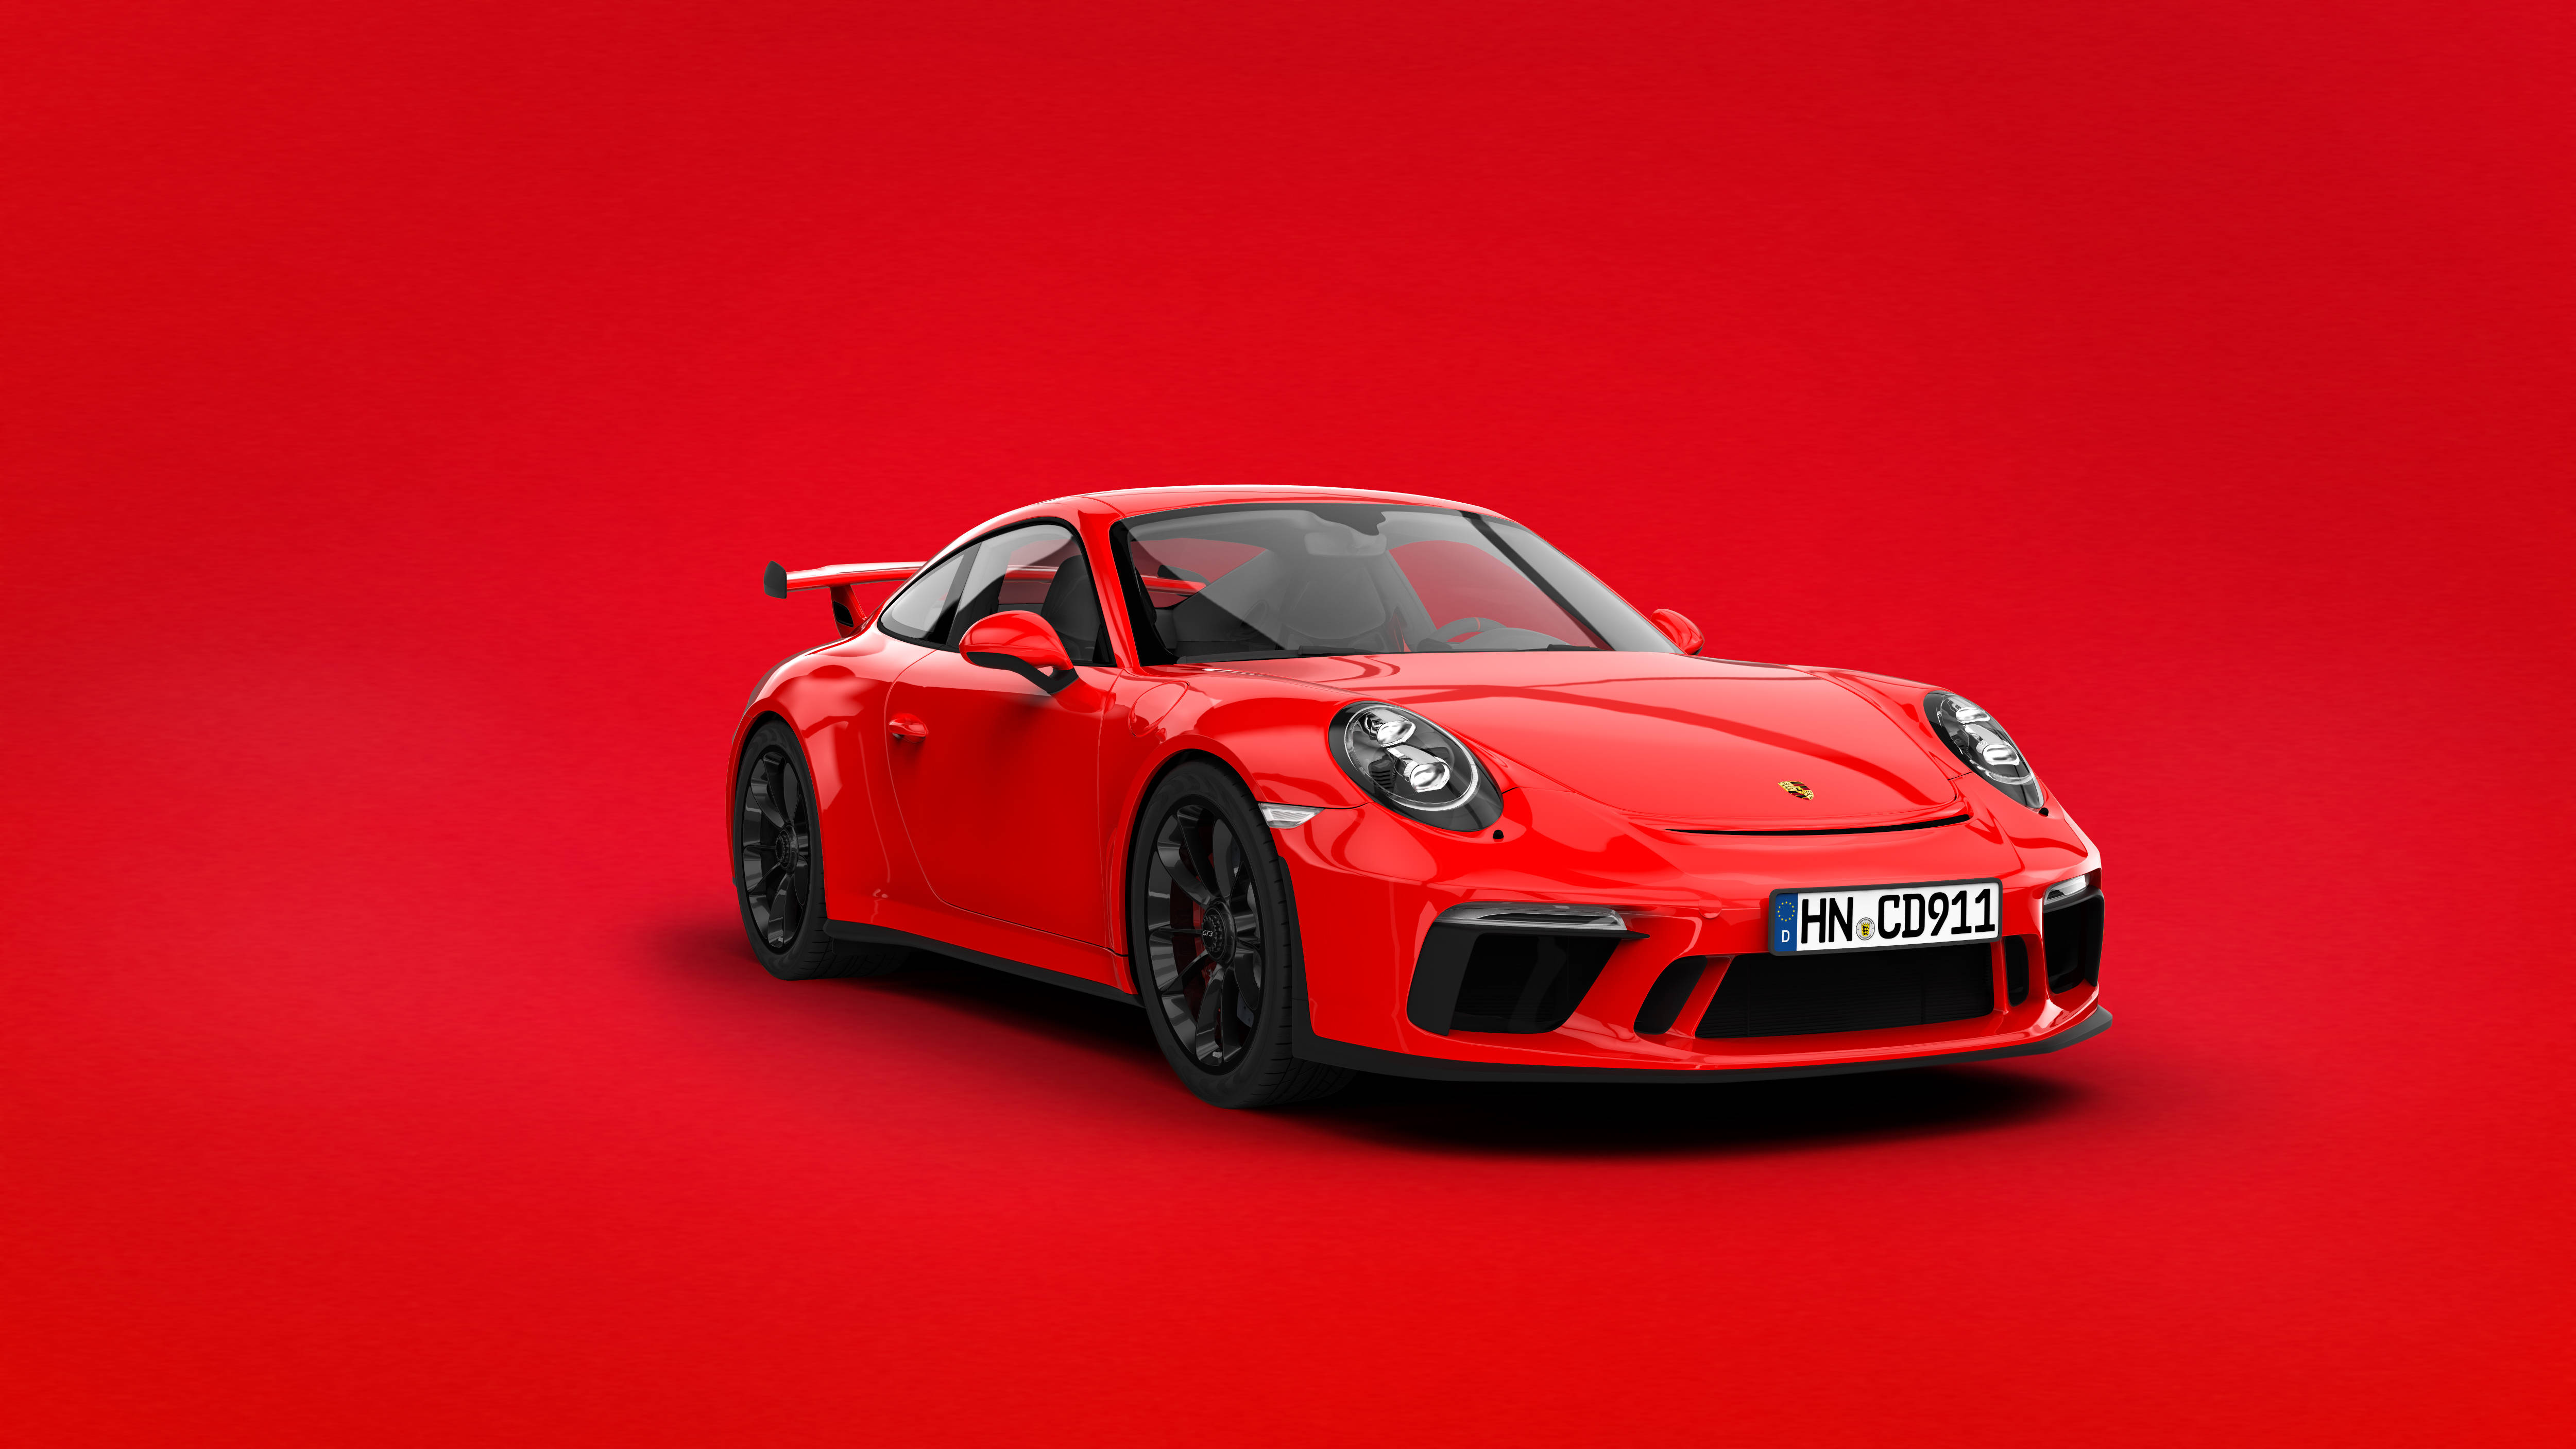 Kopfmedia Animation Offenburg - 3D Render rotes Auto / roter Porsche